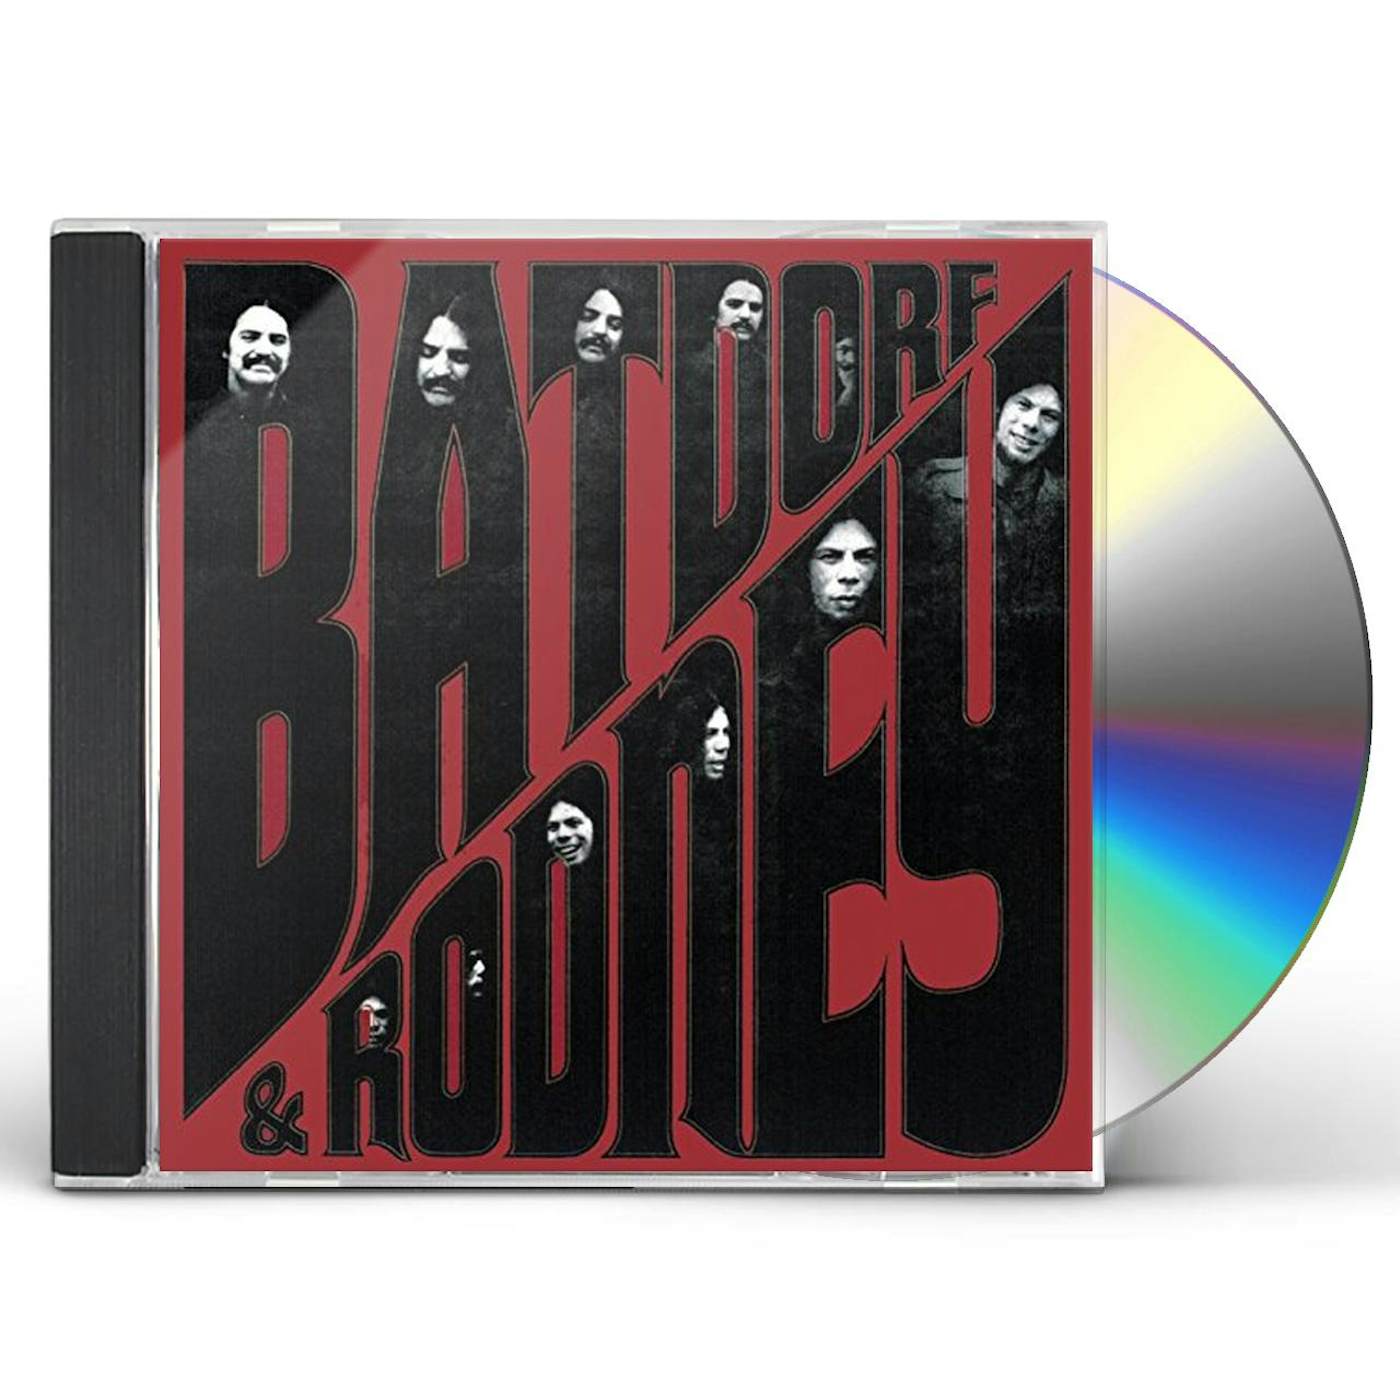 BATDORF & RODNEY CD